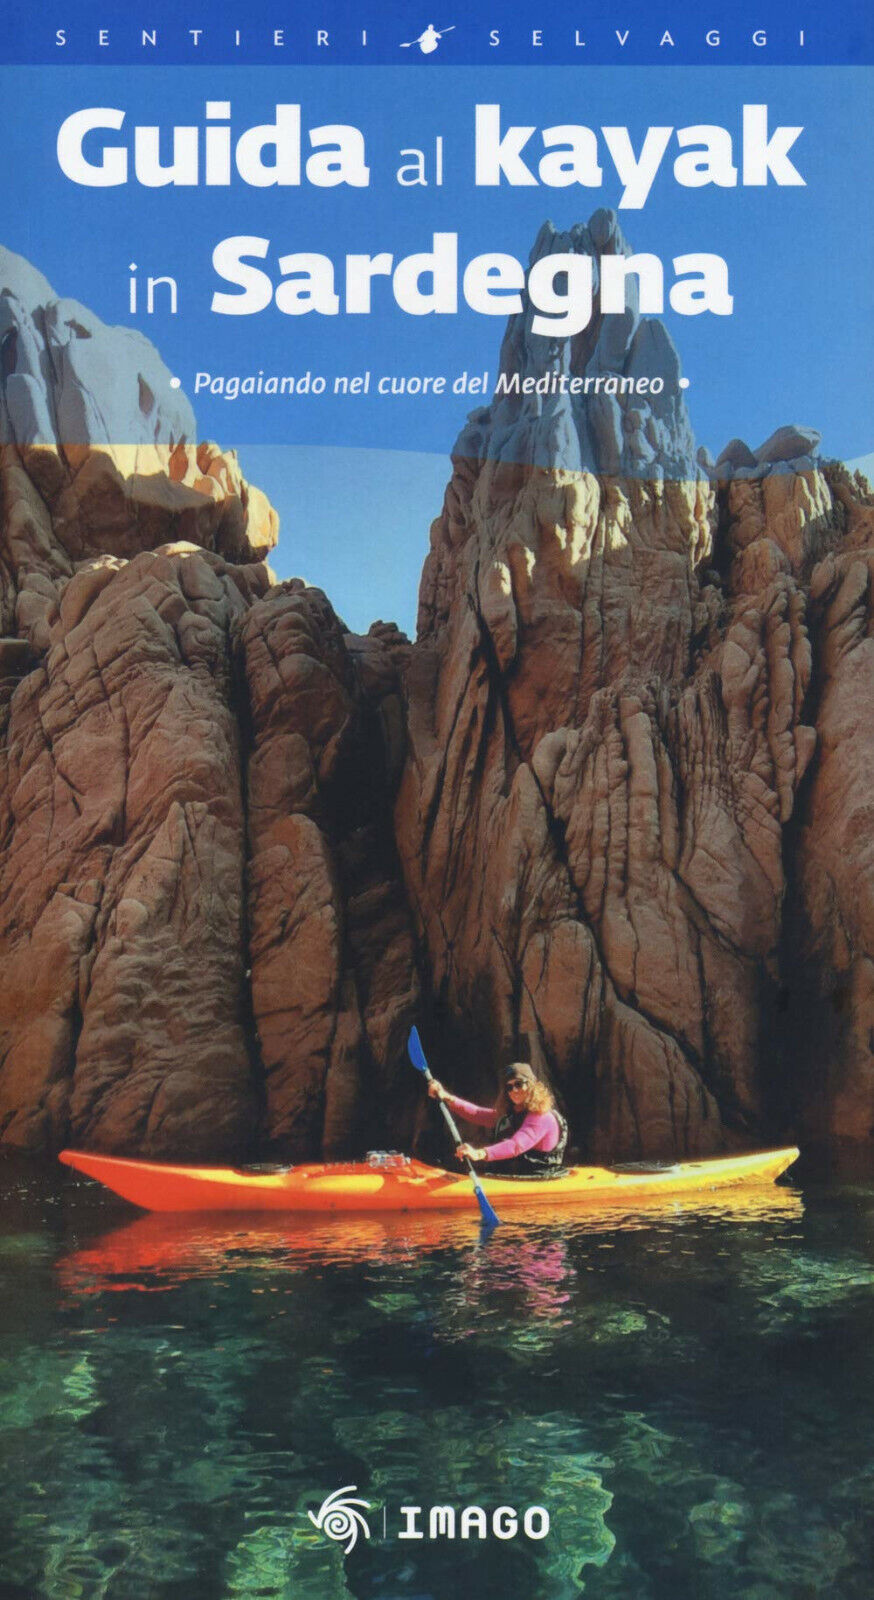 Guida al kayak in Sardegna - Telemaco Murgia - Imago Multimedia, 2020 libro usato